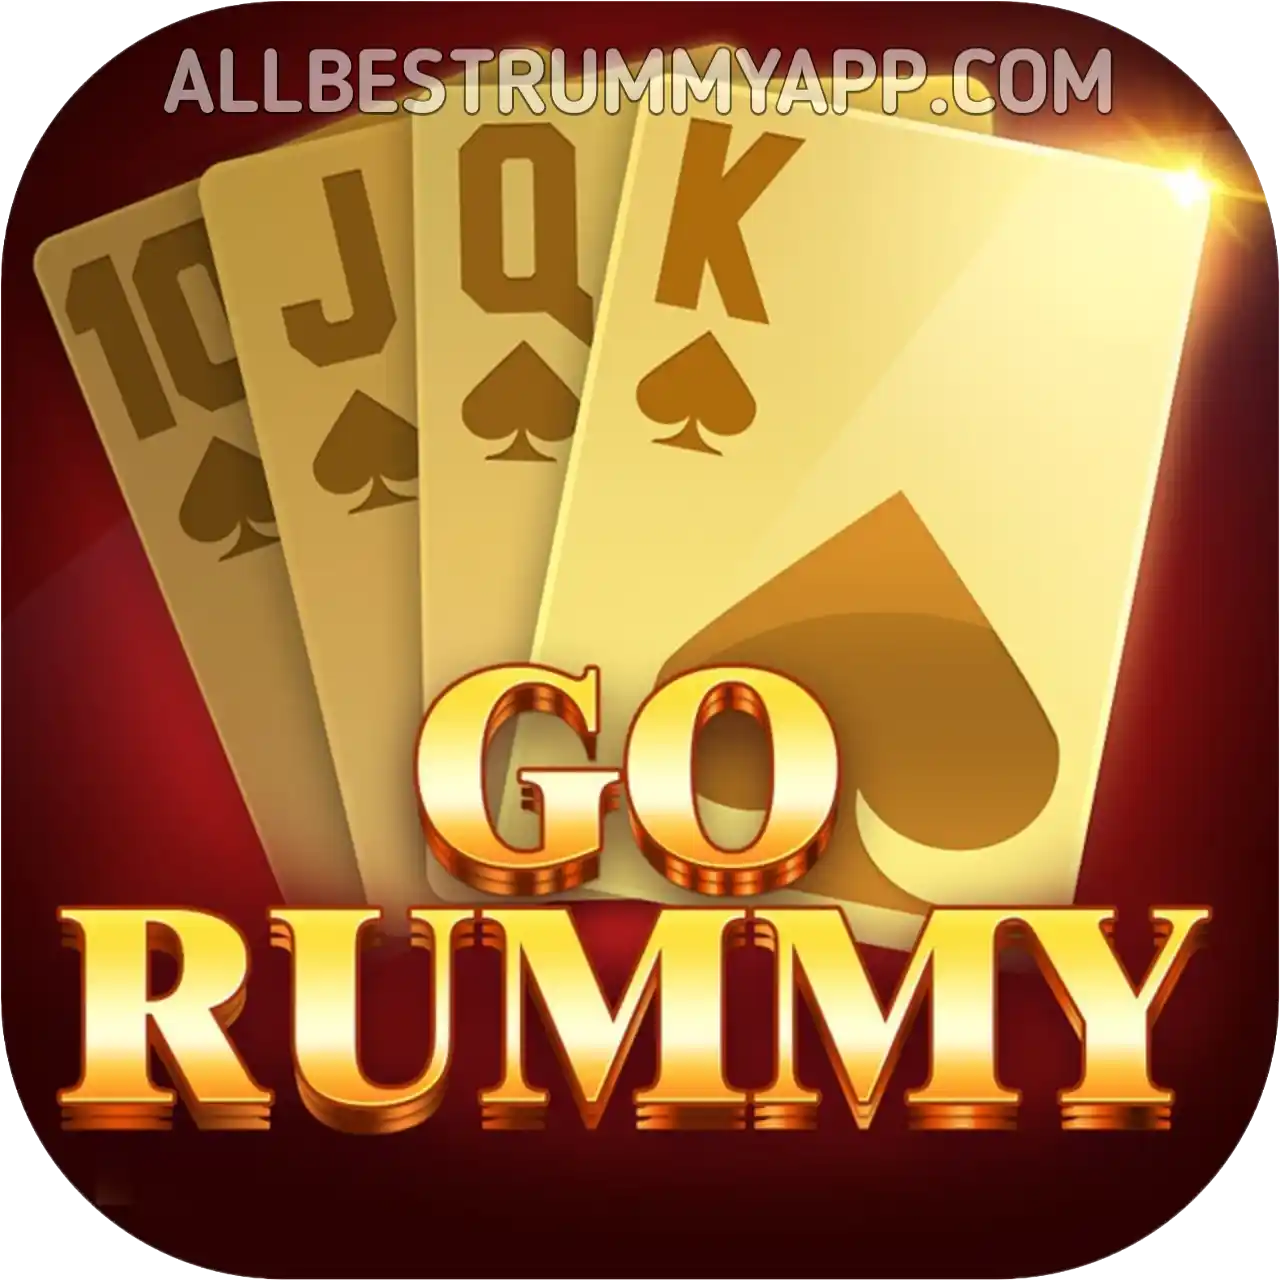 Go Rummy APK - All Best Rummy App